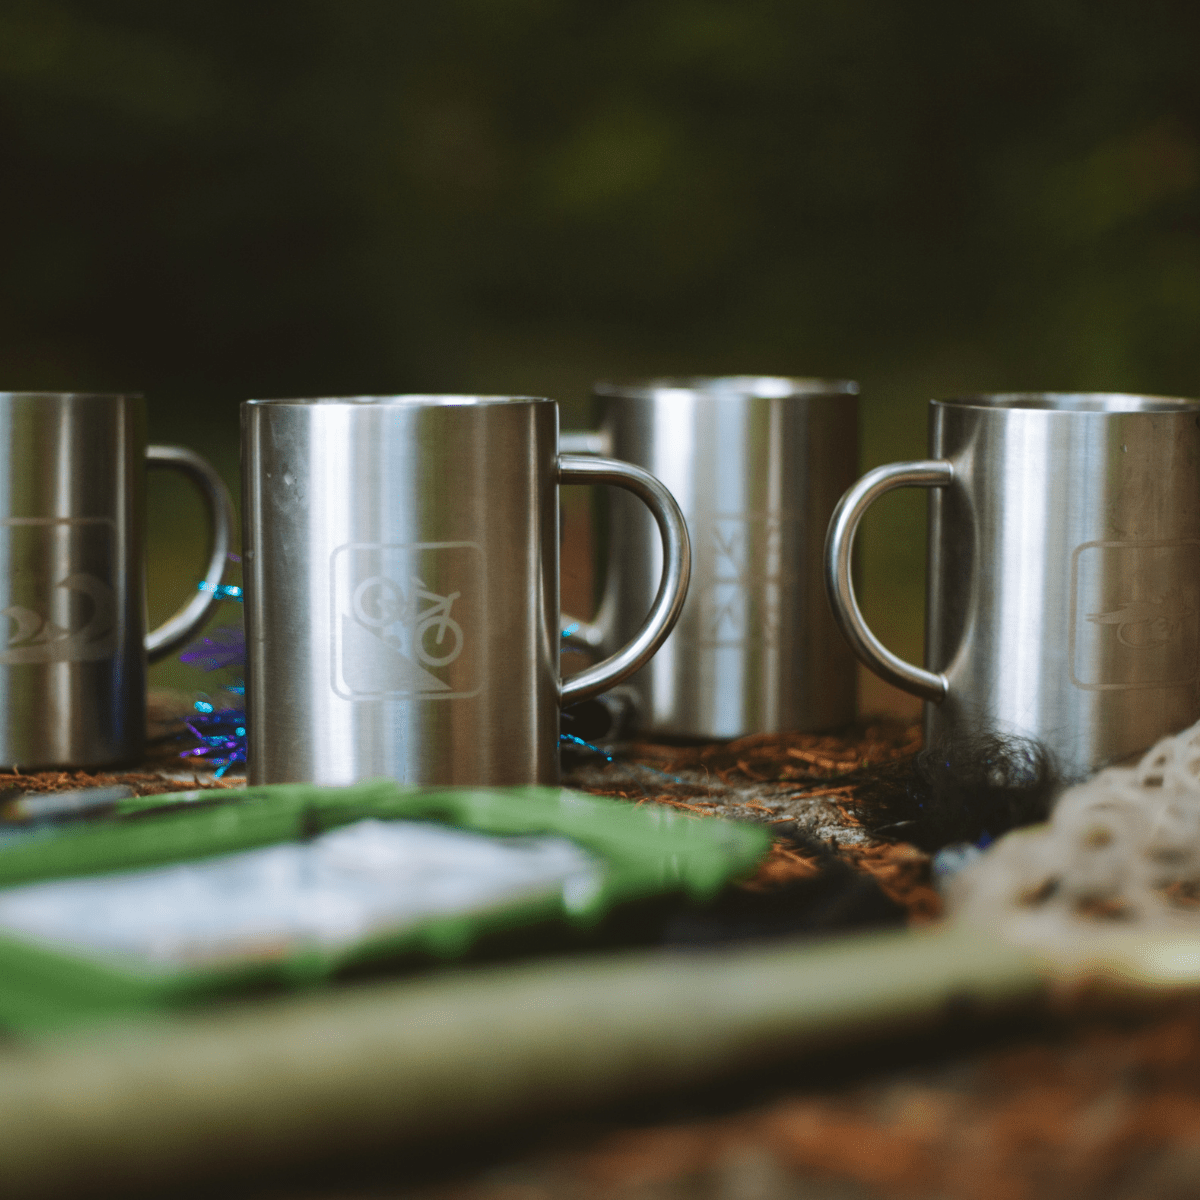 Trxstle Coffee & Insulated Mugs Bundle